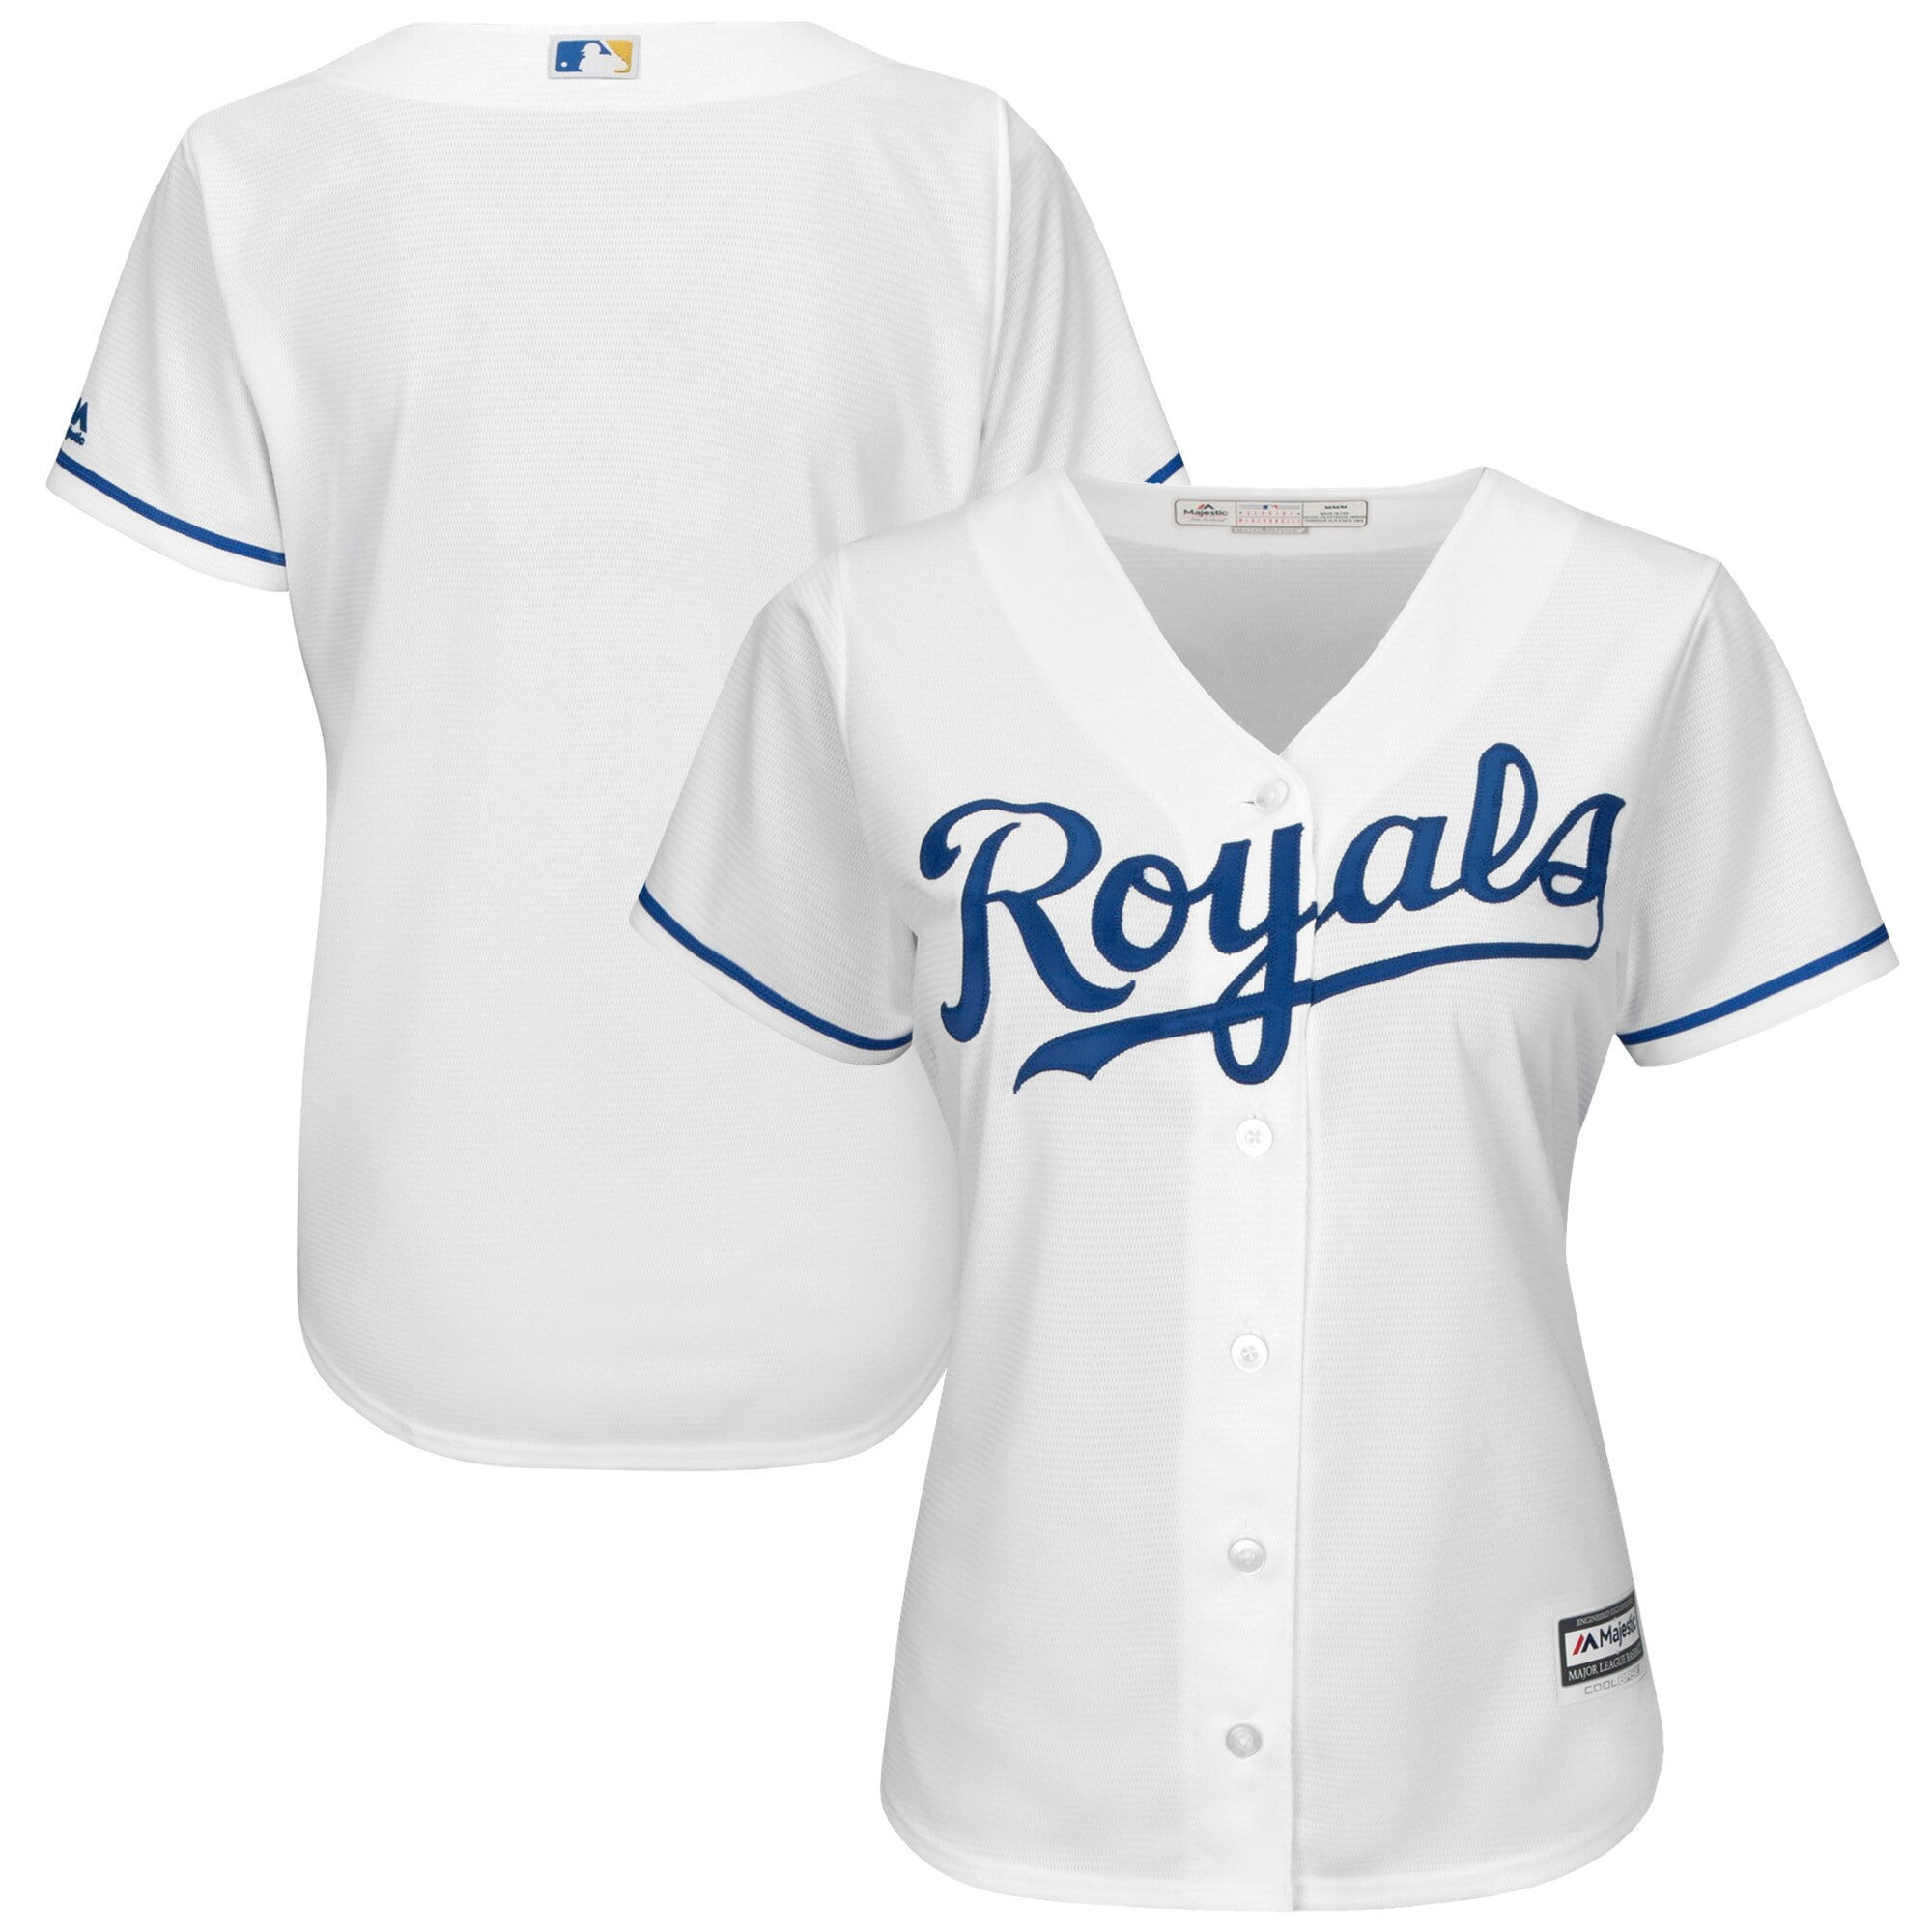 royals cool base jersey